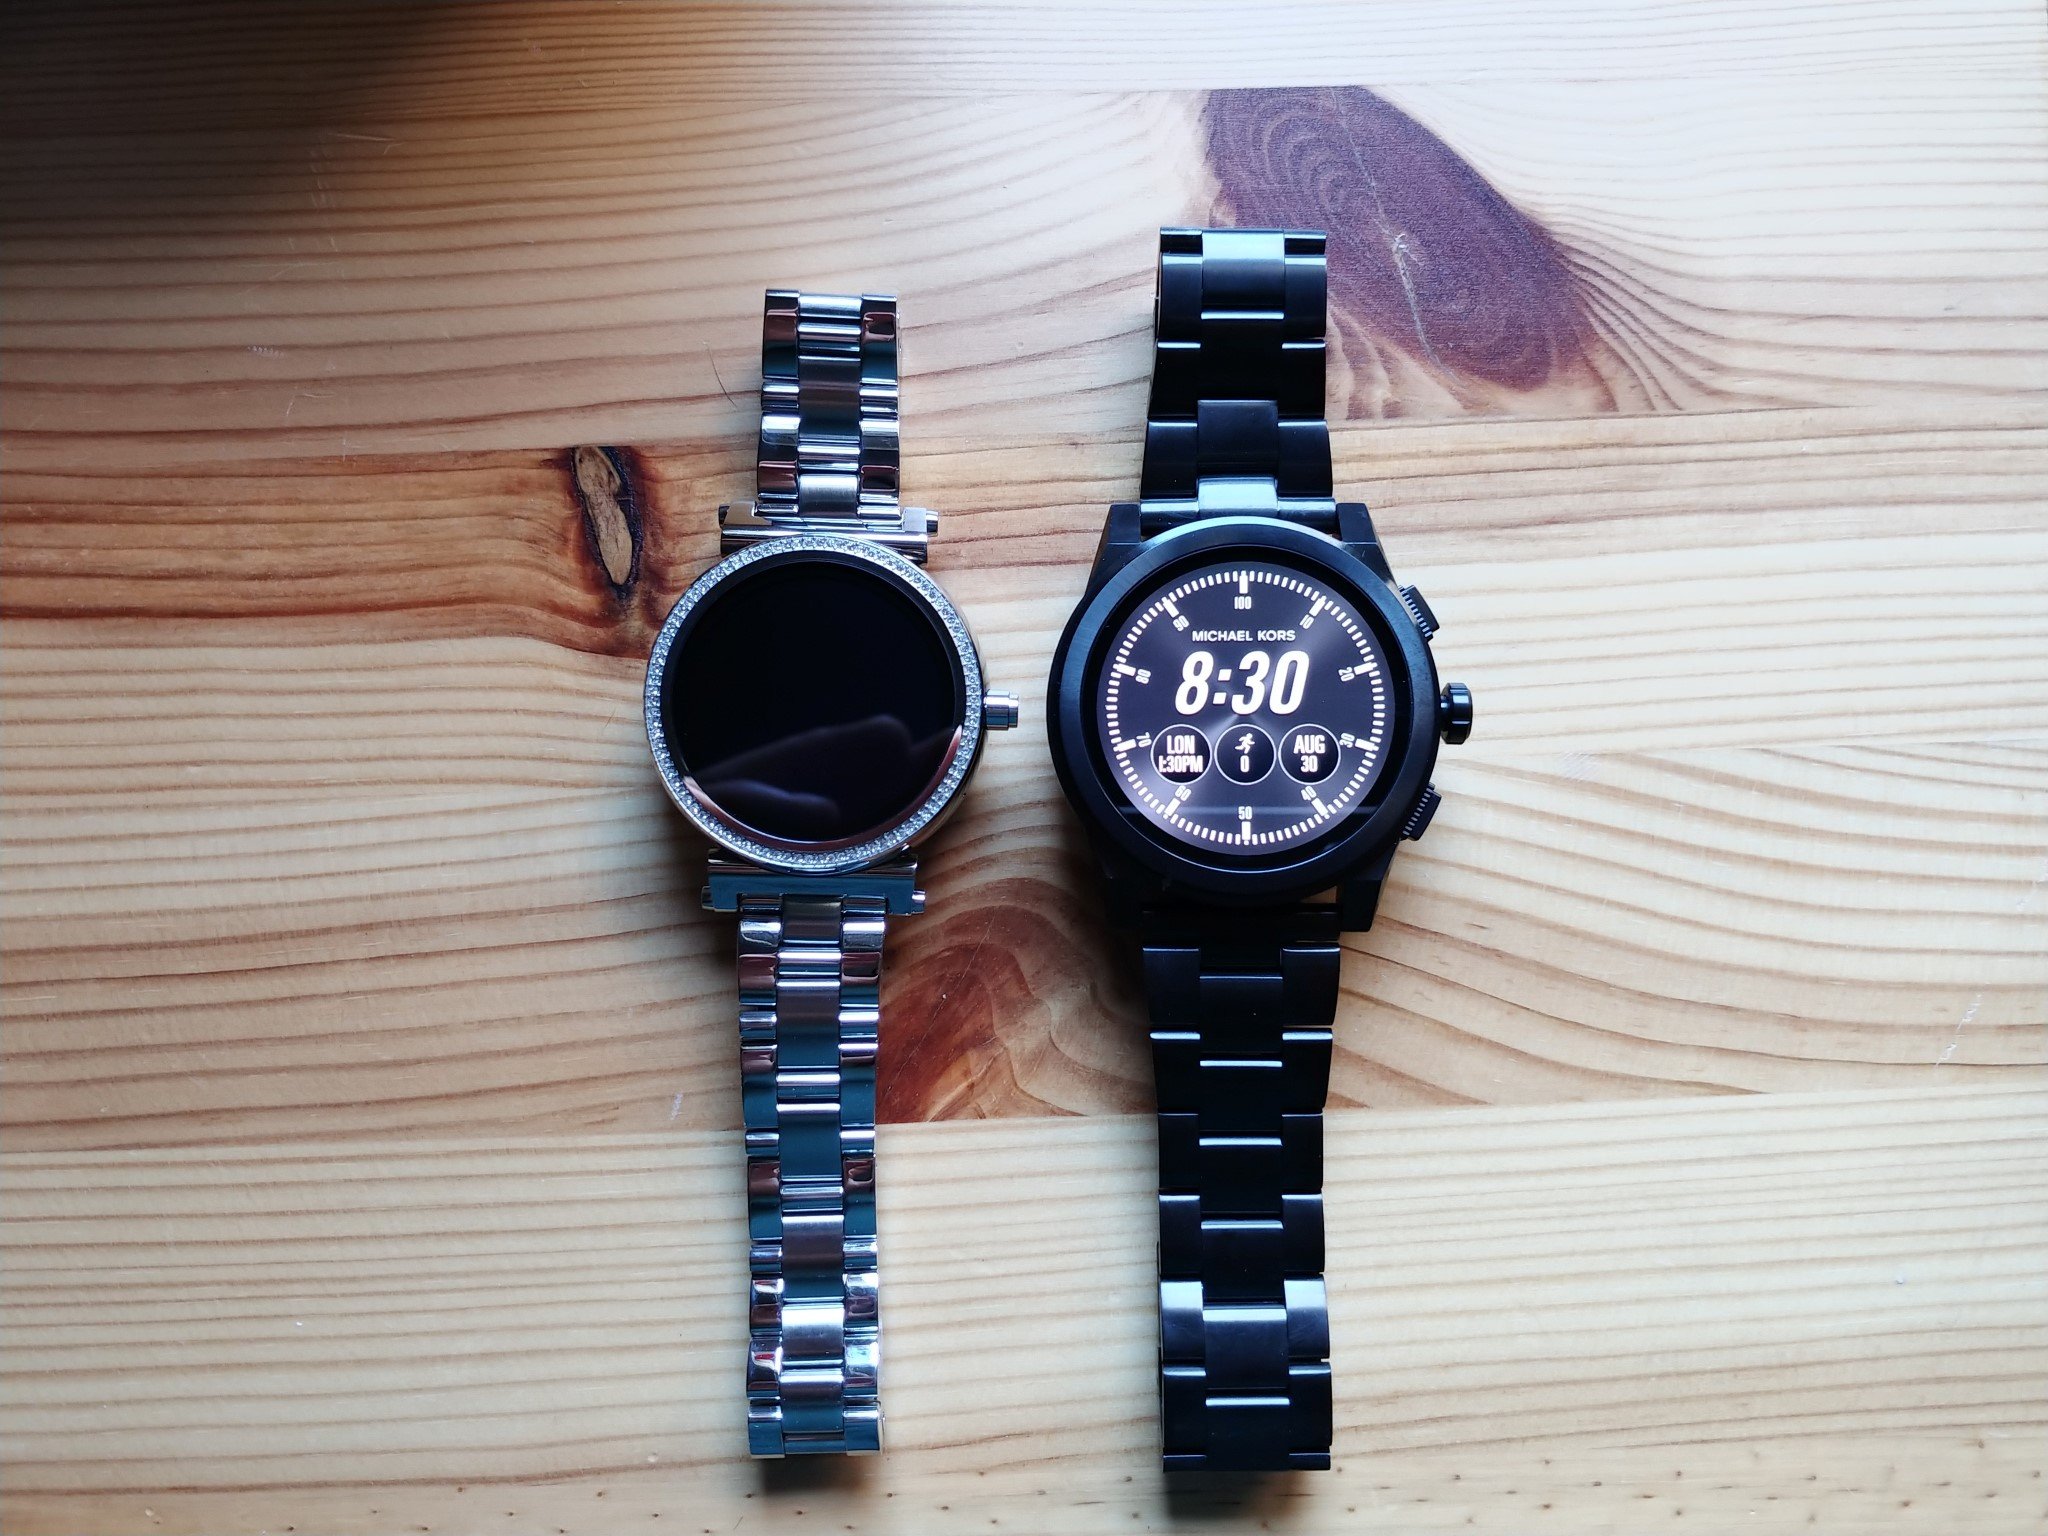 michael kors grayson blue smartwatch